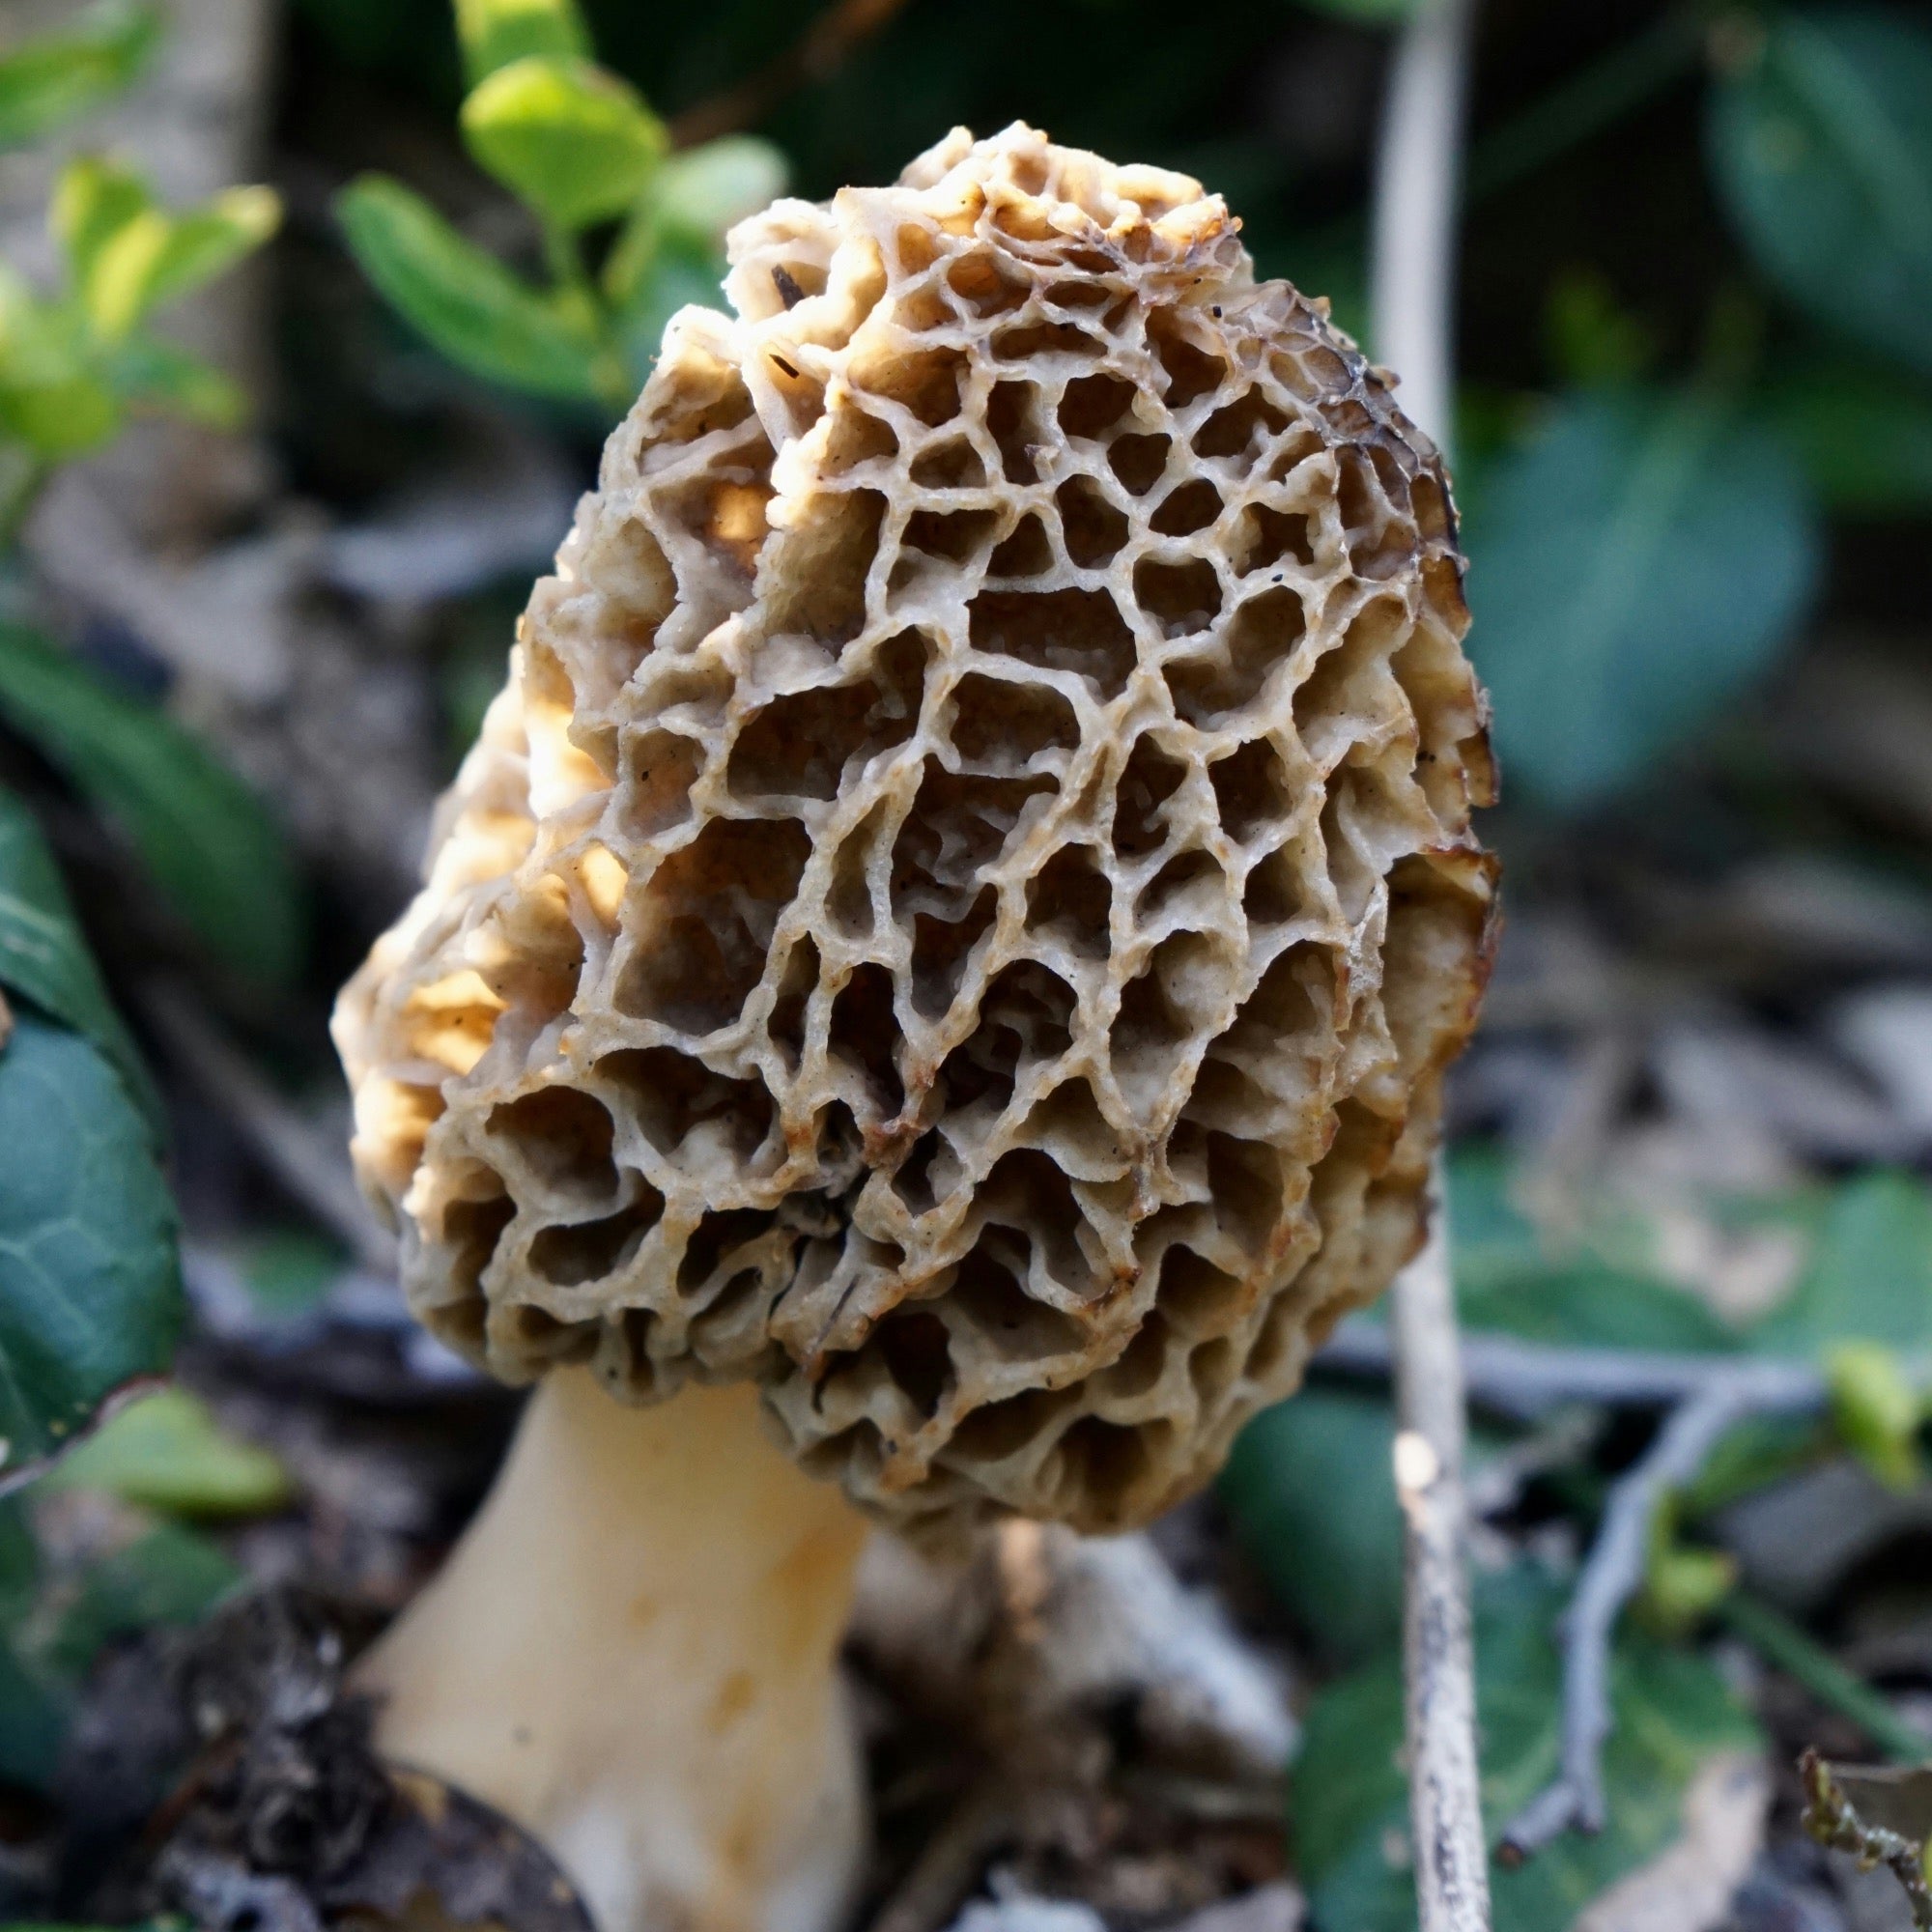 7 Fun & Easy Ways to Celebrate Mushrooms This Spring